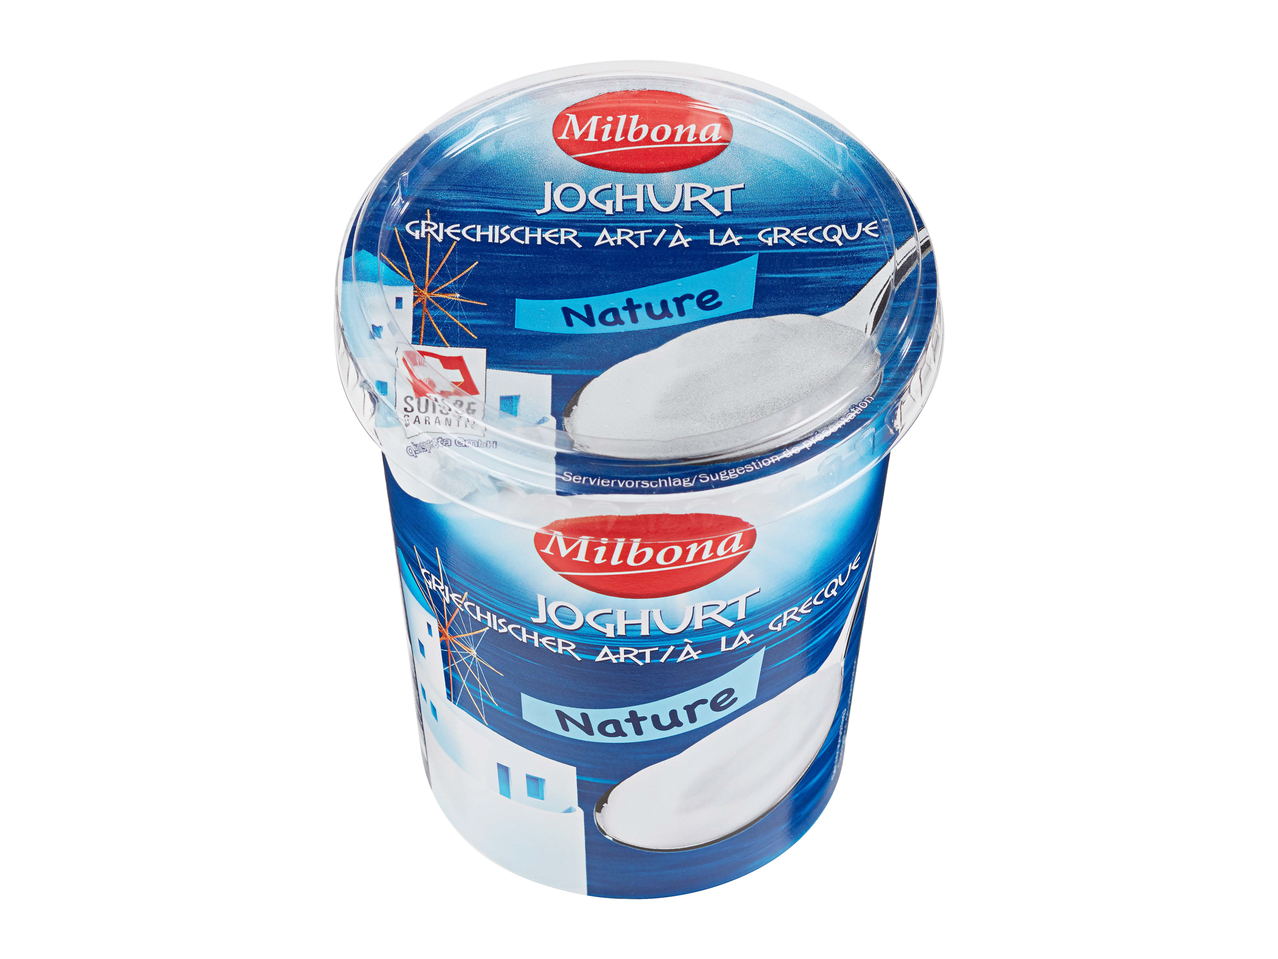 Griechischer Joghurt nature